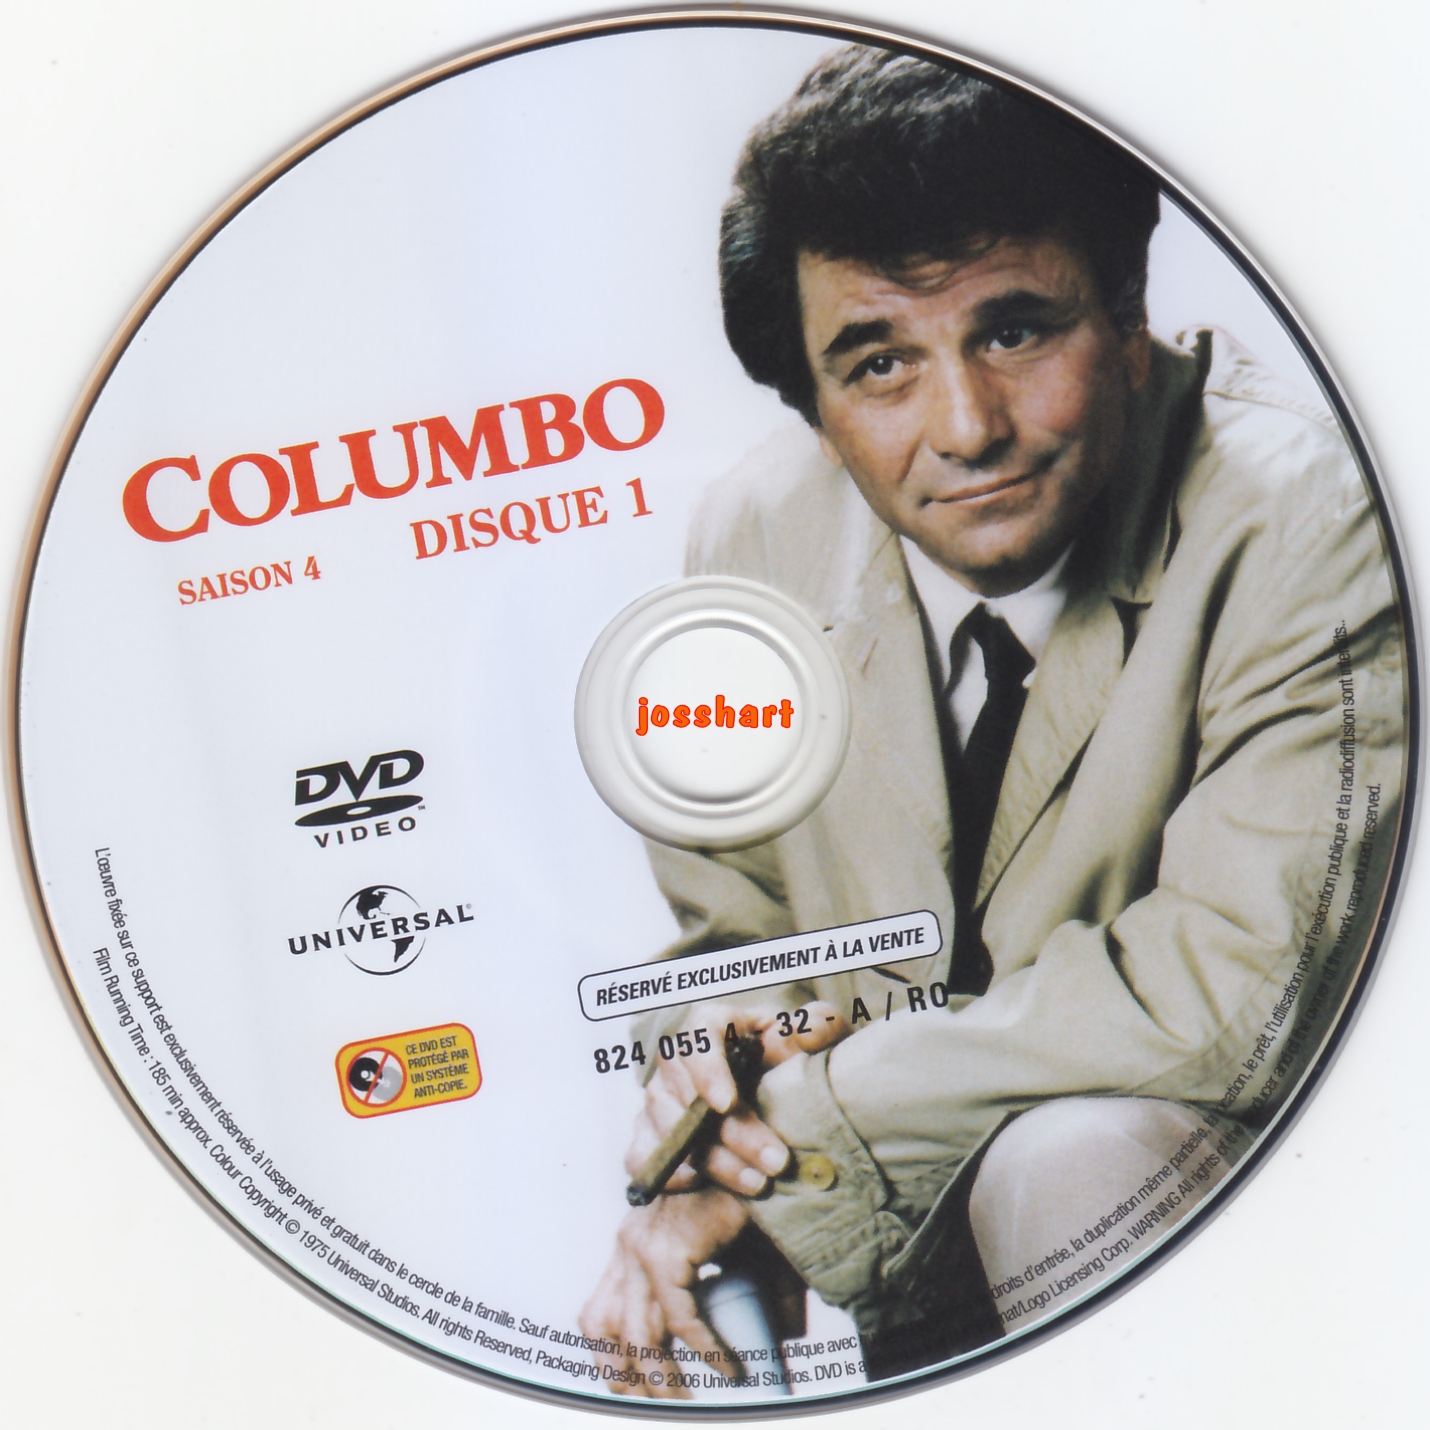 Columbo S4 DISC1